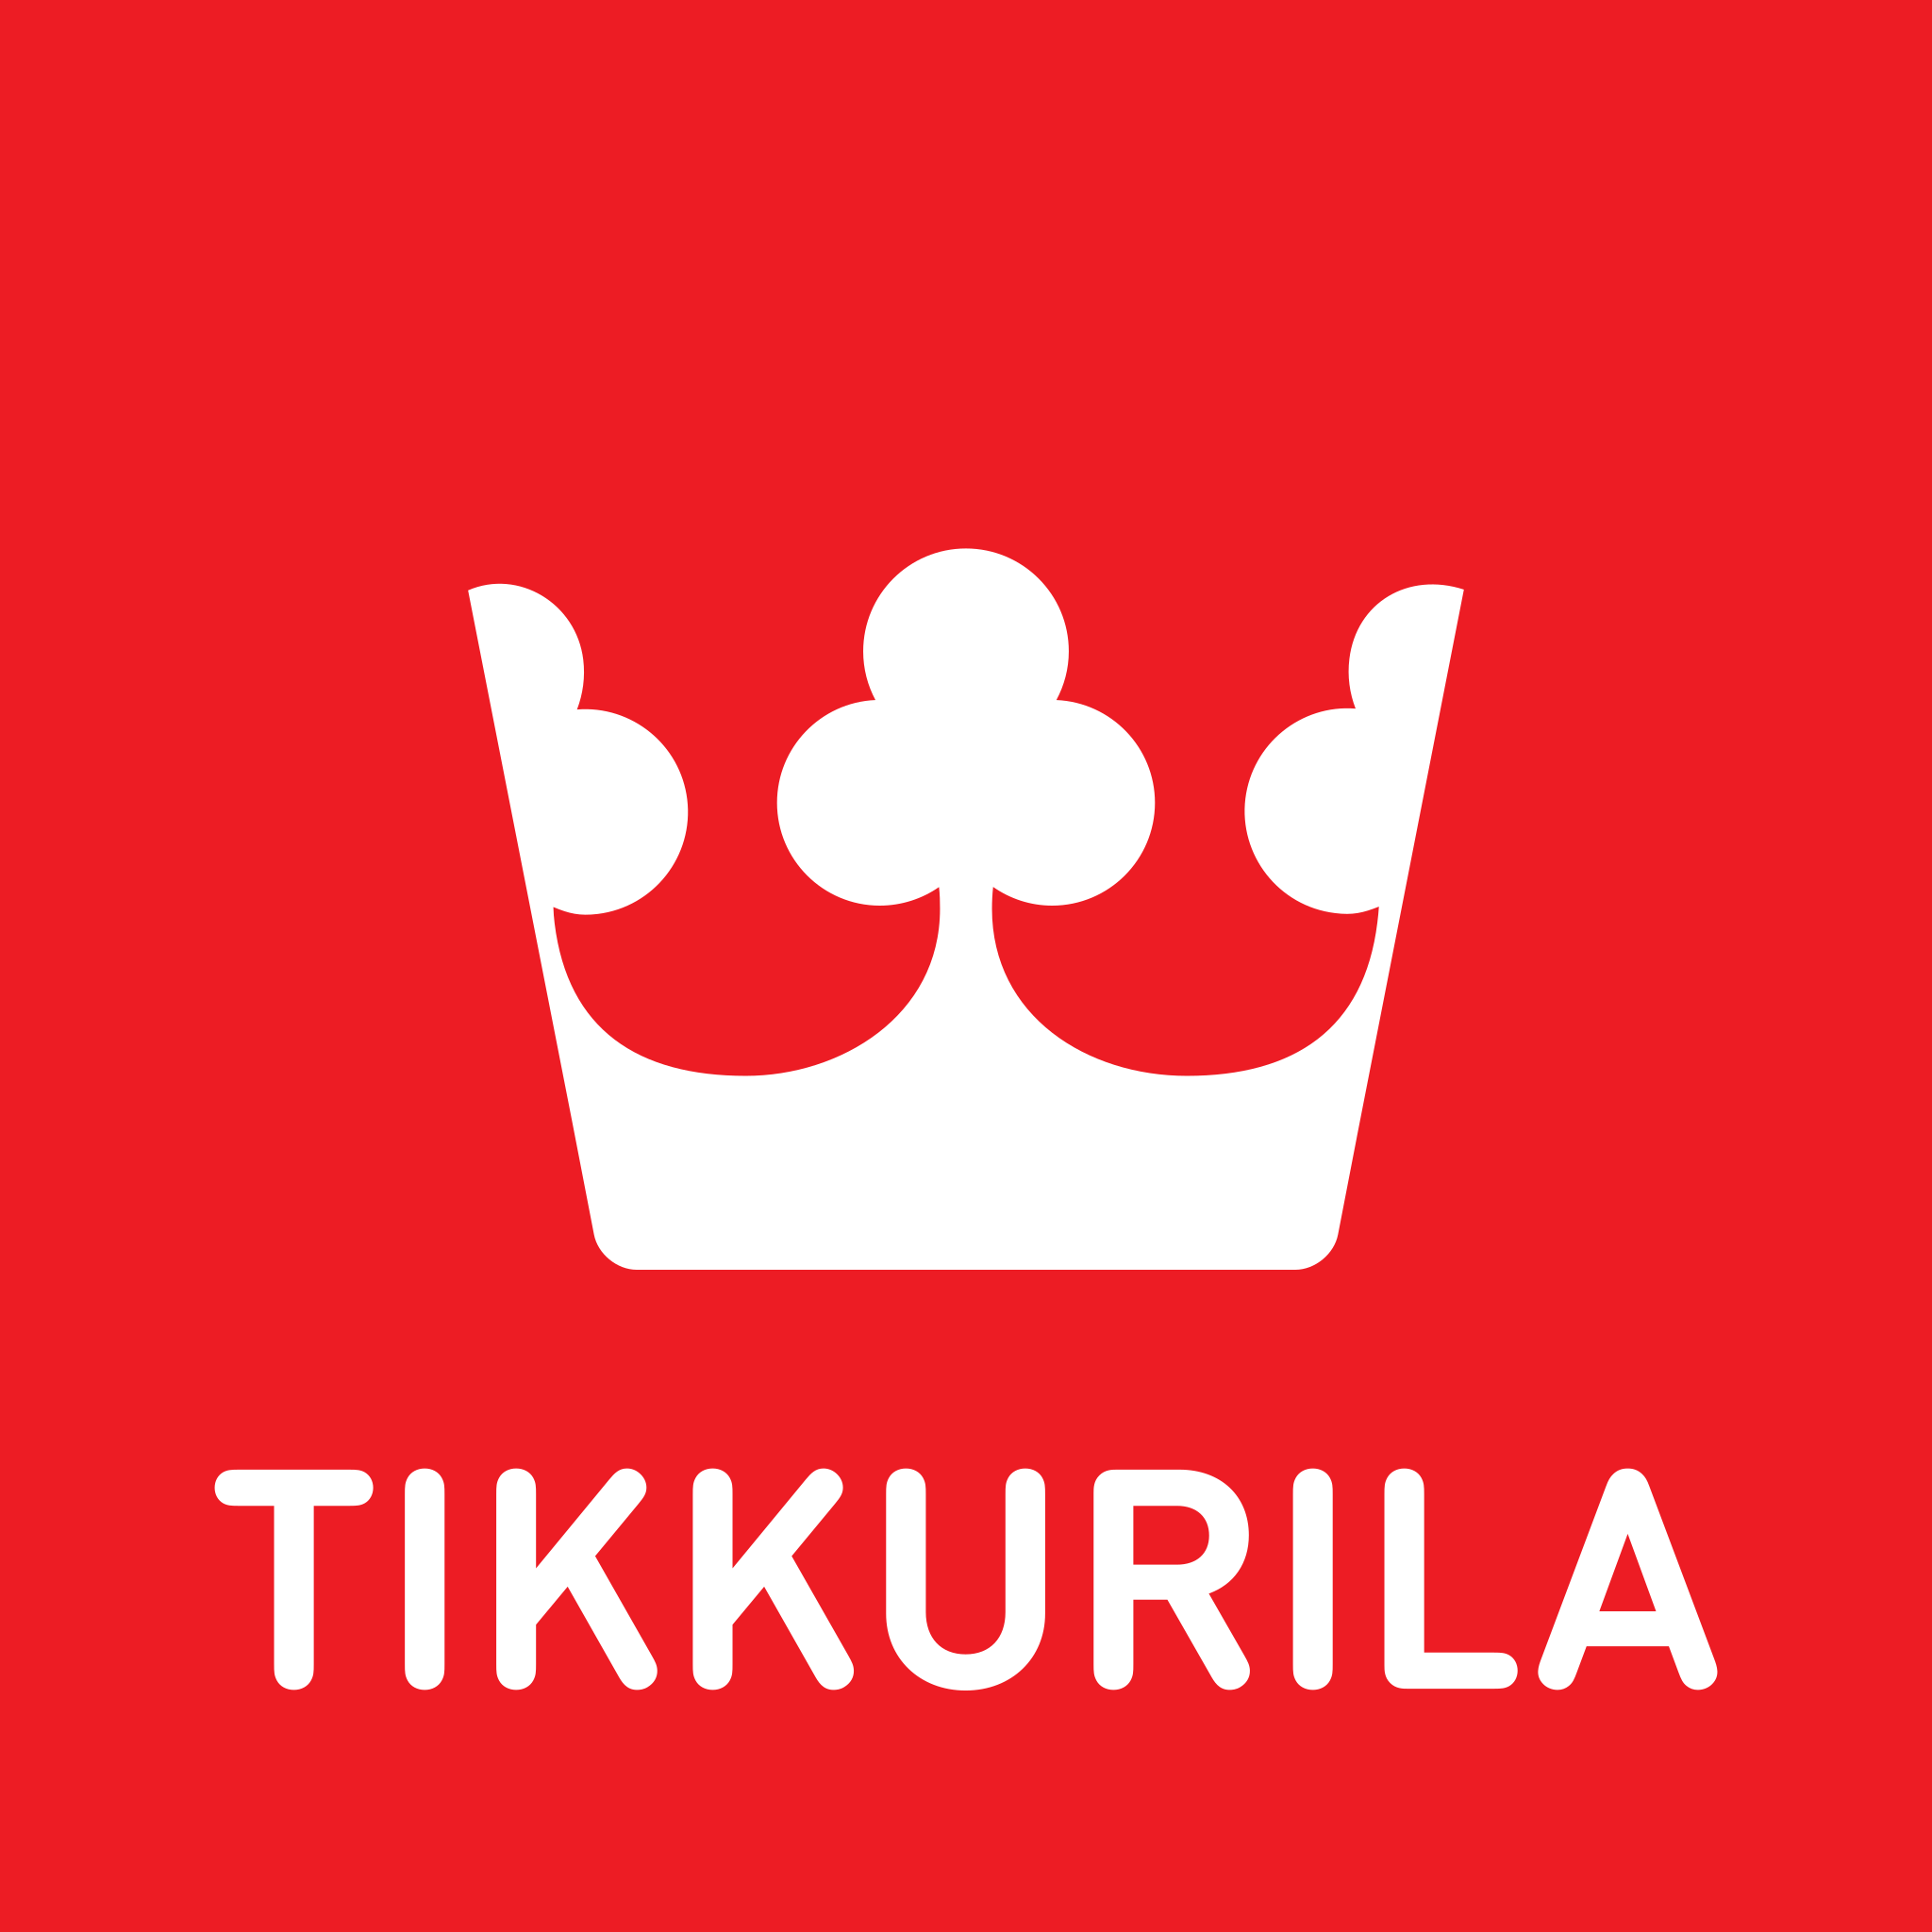 Download Tikkurila logo font